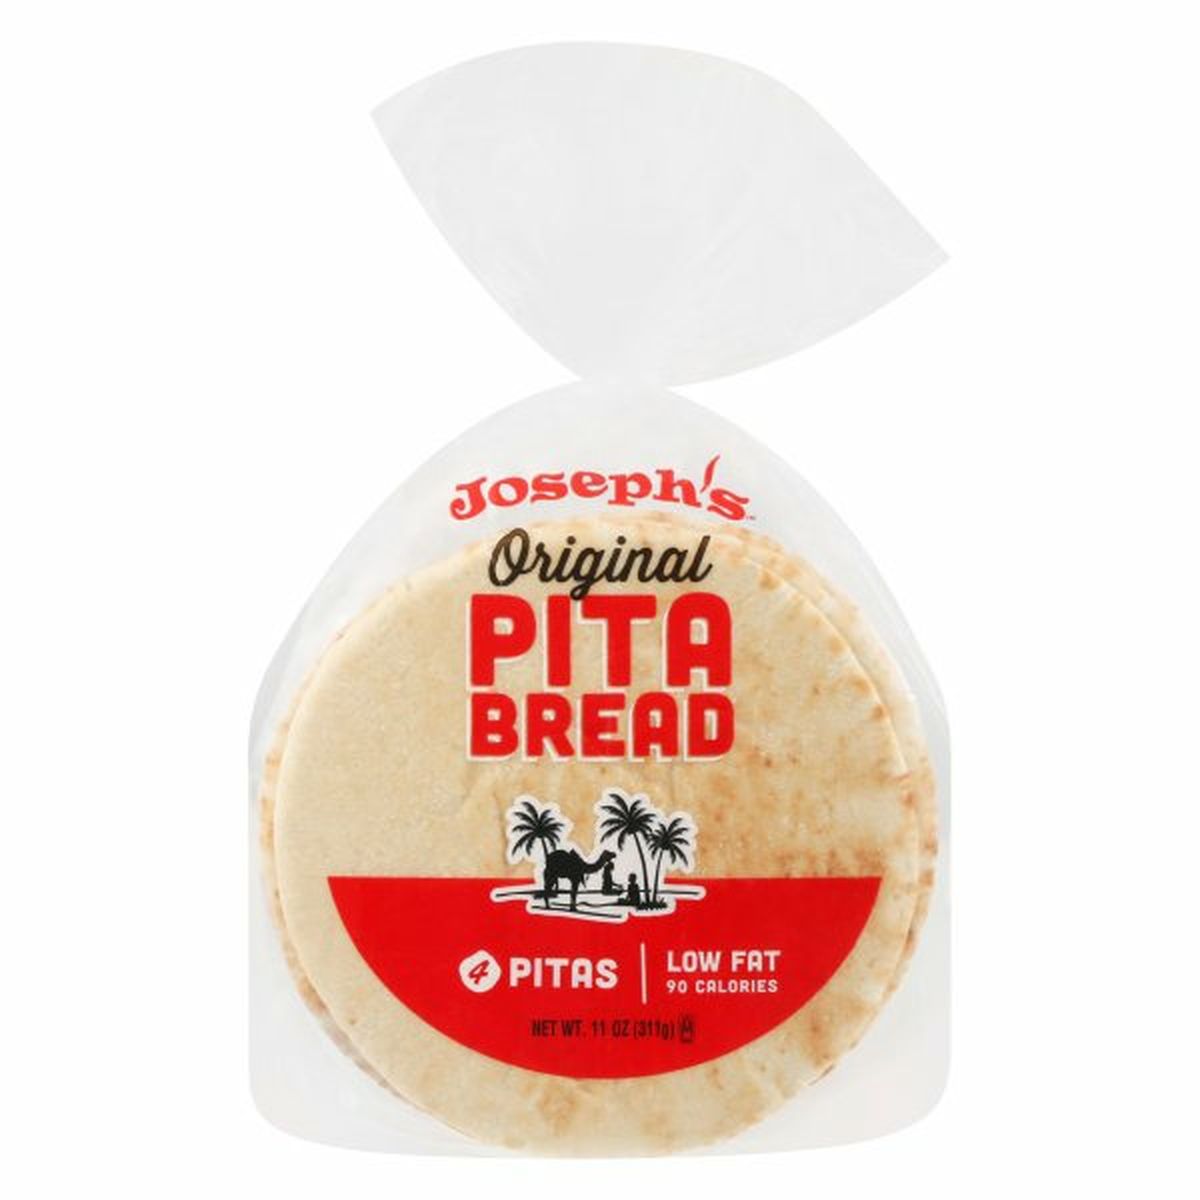 Calories in Joseph's Pita Bread, Original